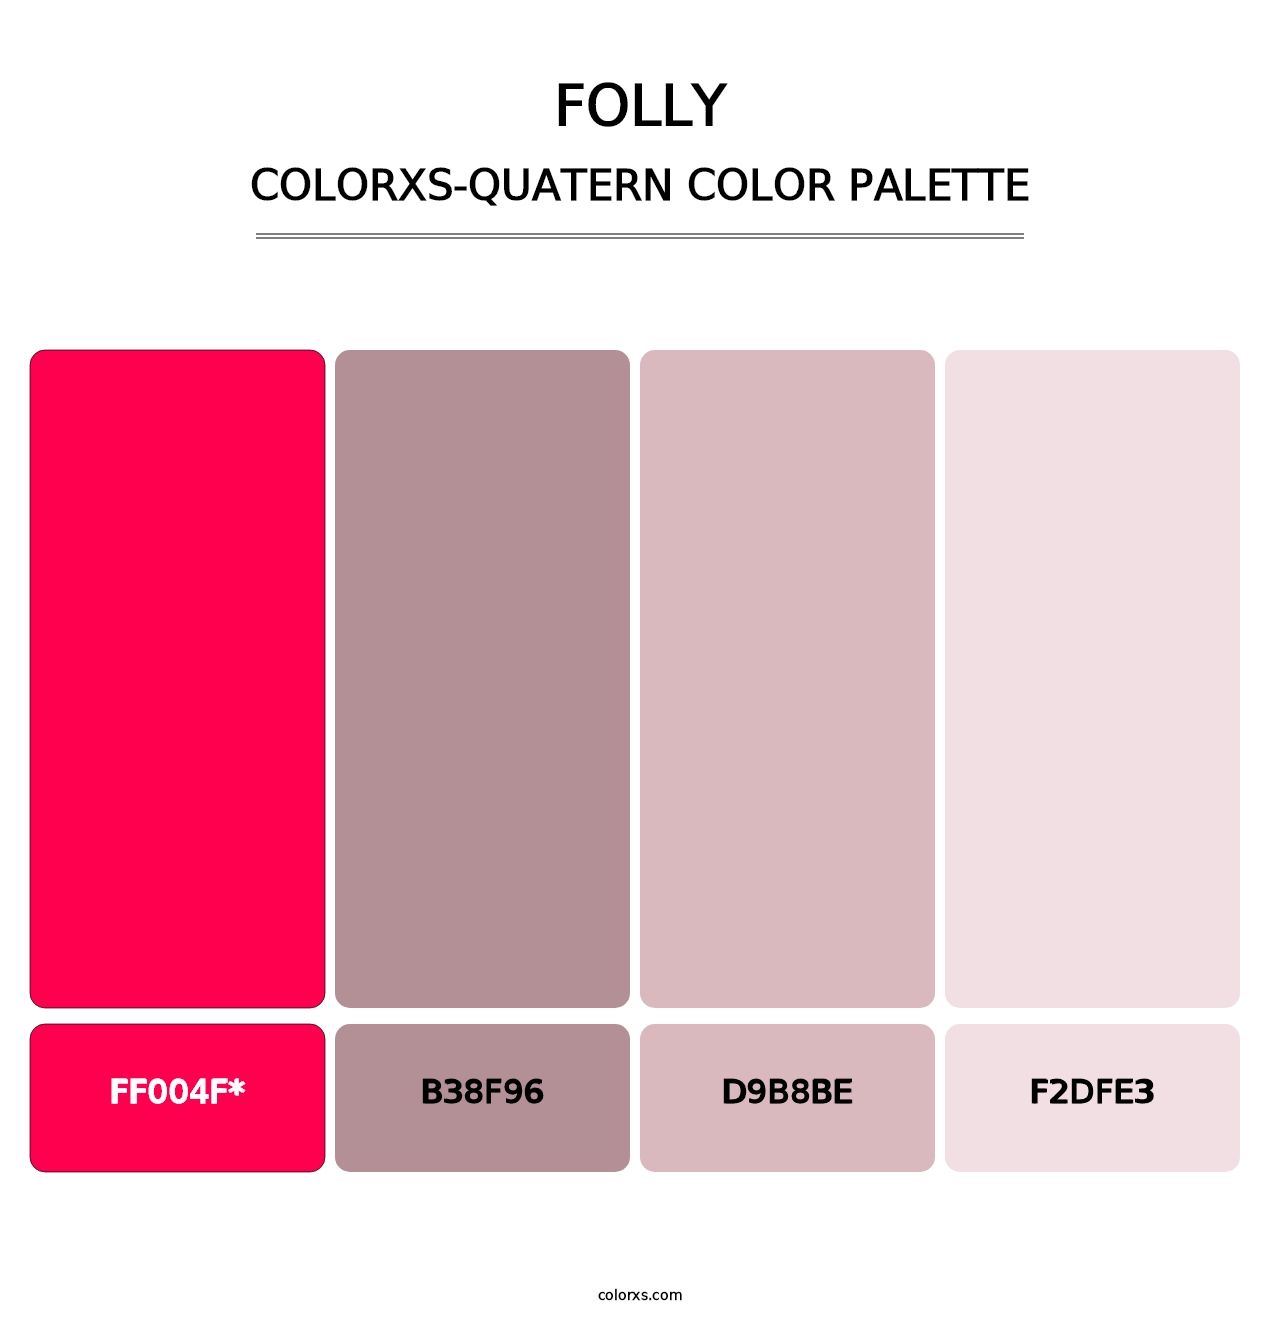 Folly - Colorxs Quatern Palette